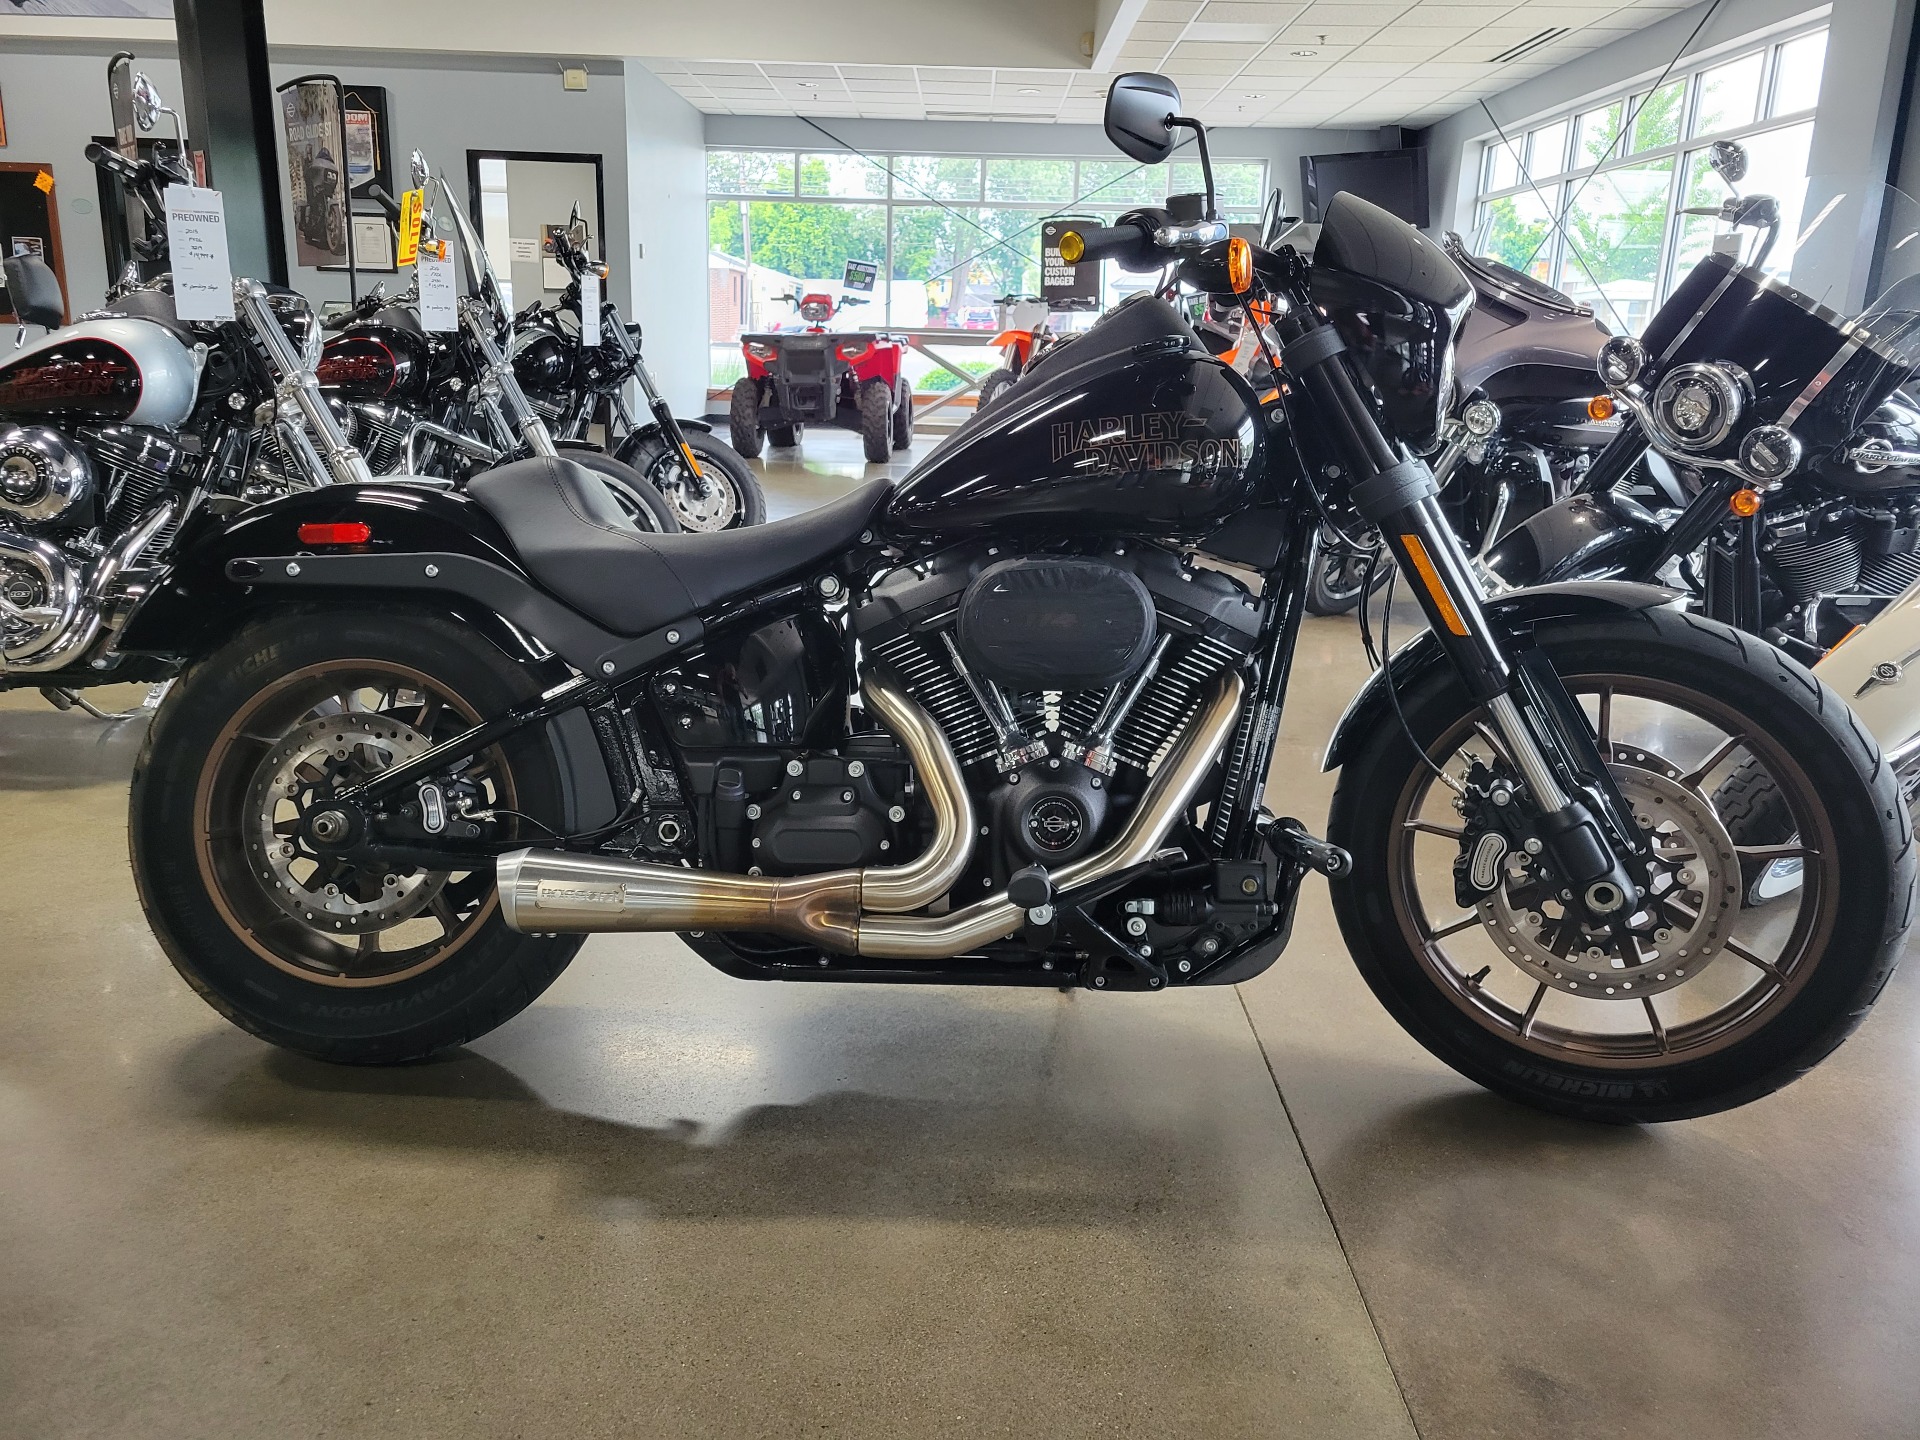 2021 Harley-Davidson Low Rider®S in Syracuse, New York - Photo 1